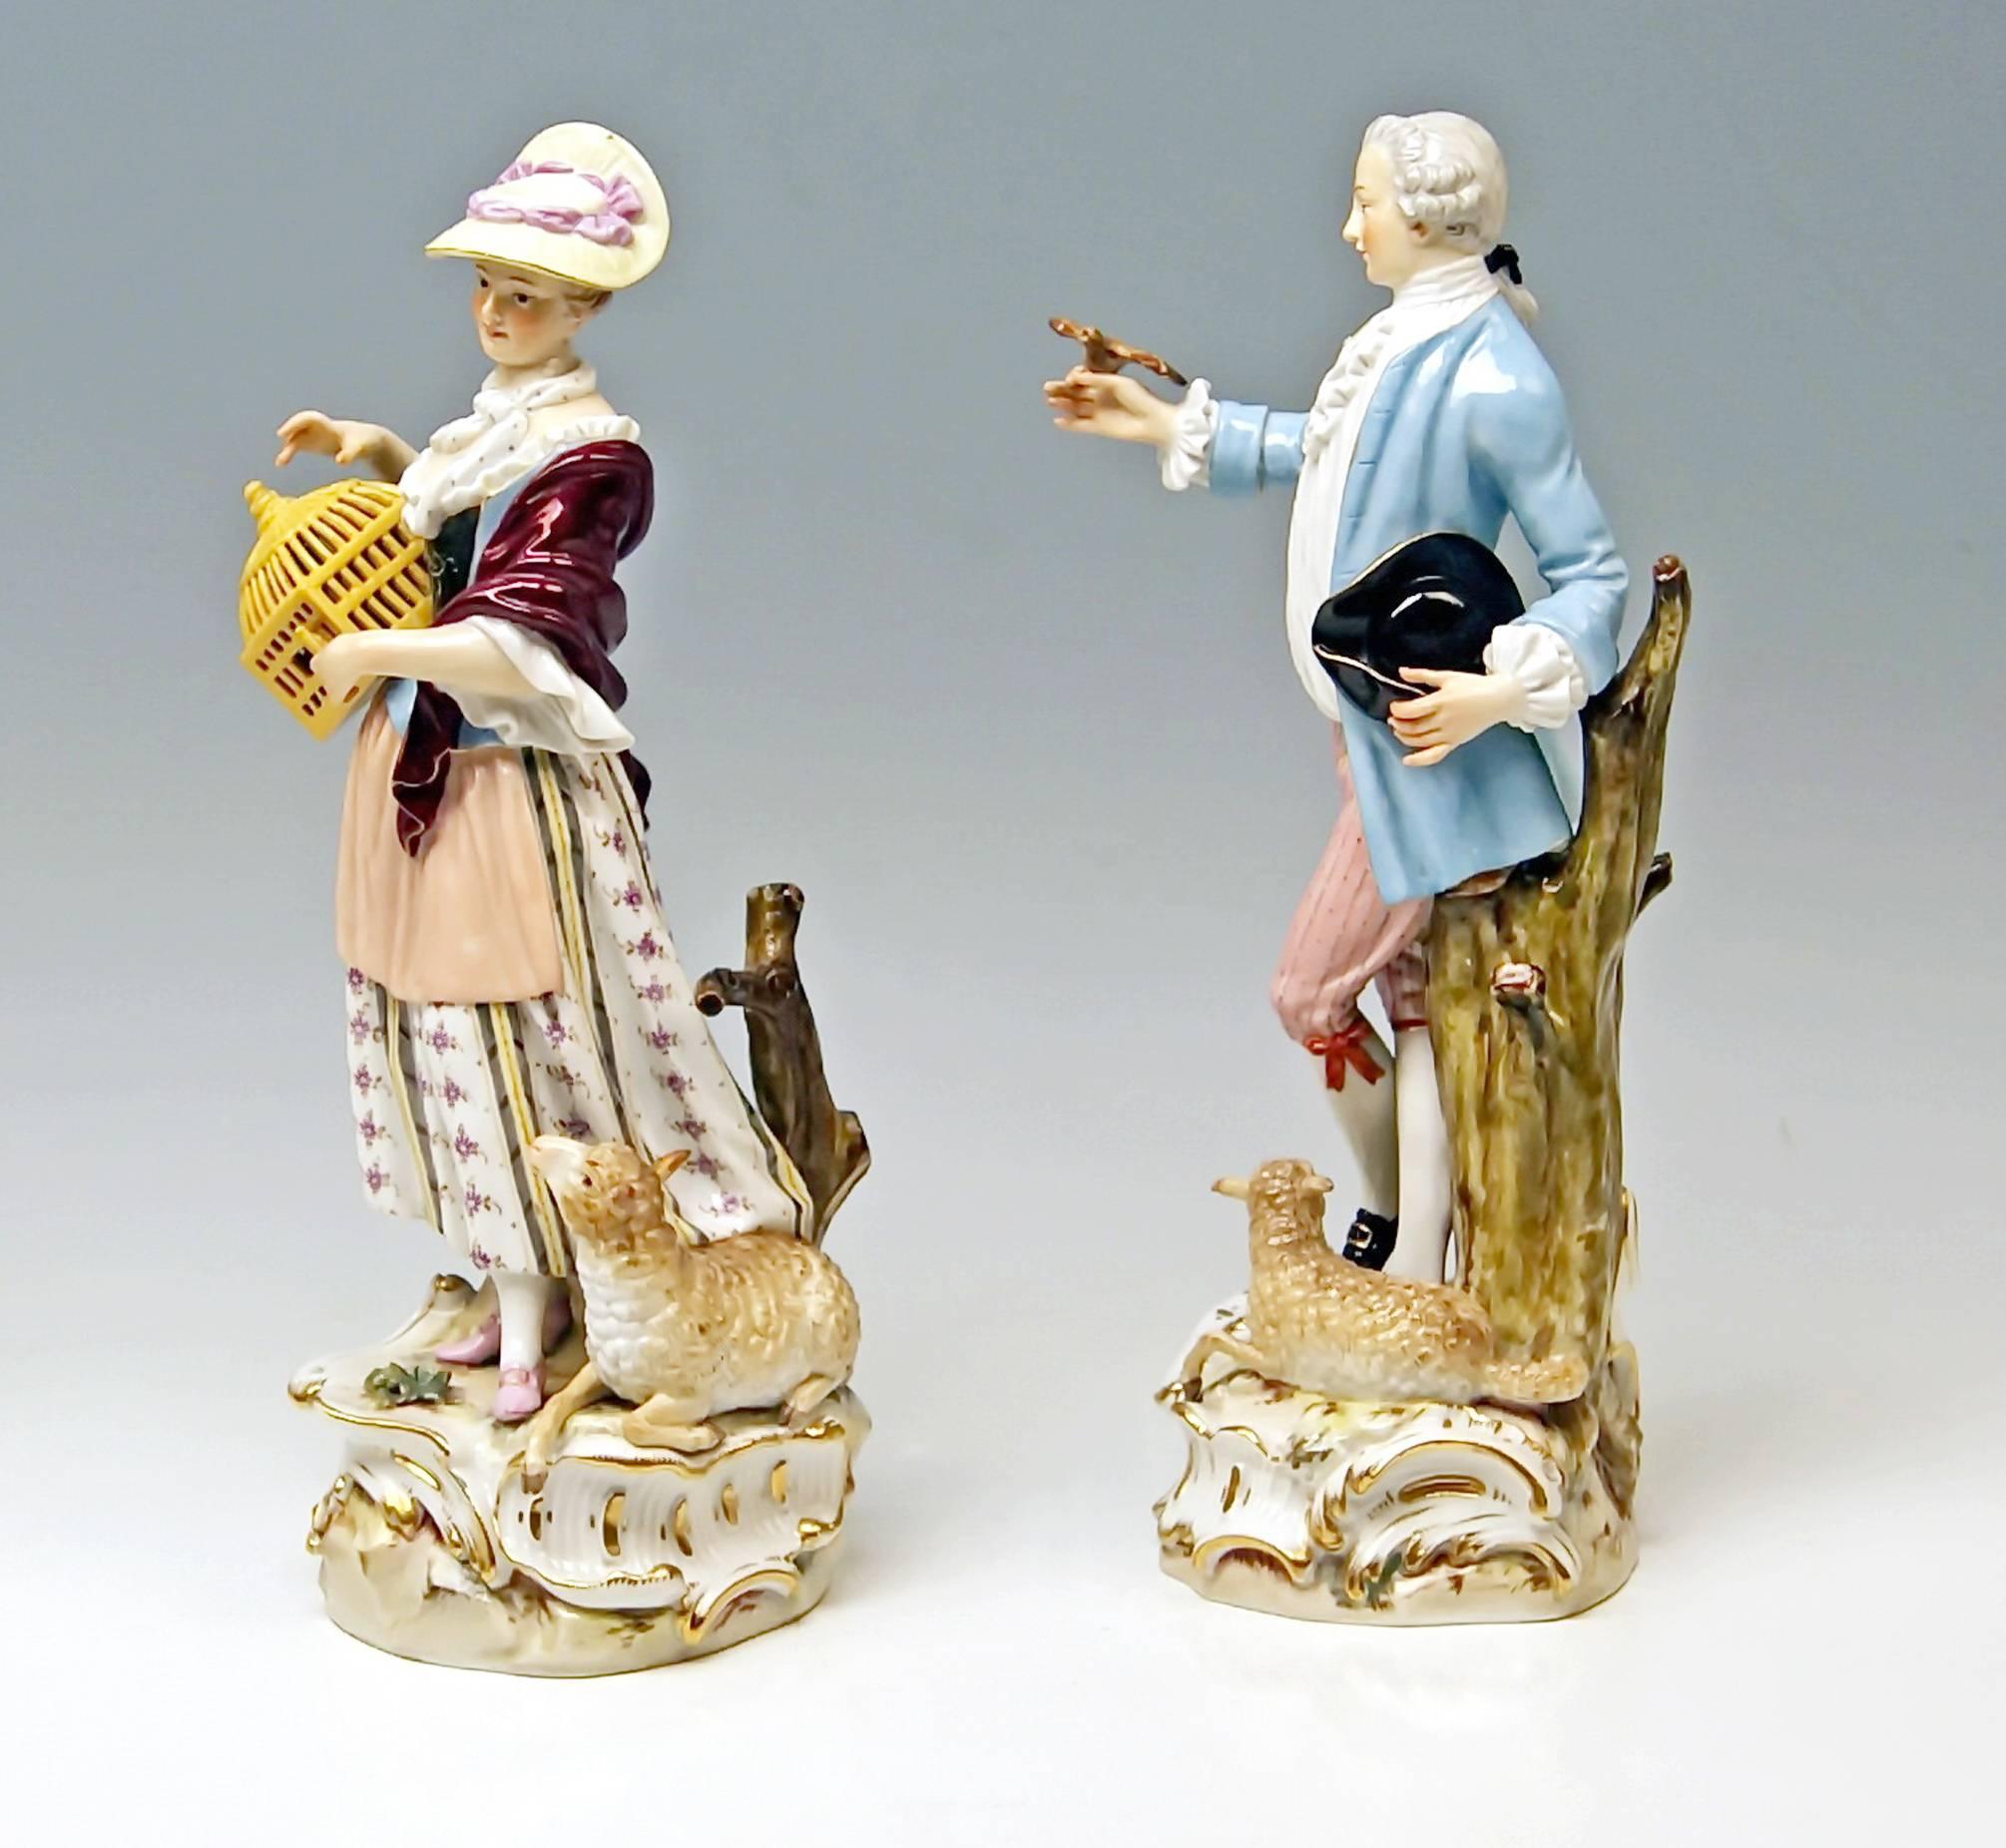 Meissen 19th century most lovely pair of figurines:
Shepherd with bird and shepherdess with birdcage.
Designed by Johann Joachim Kaendler (model created circa 1750).
Made circa 1860-1870.

Designer: 
Johann Joachim Kaendler (born in 1706 near